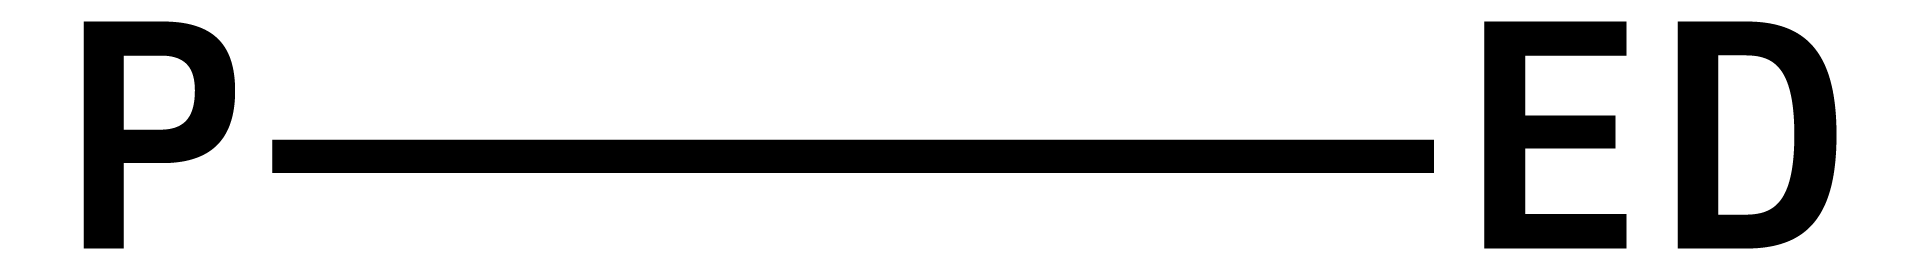 PED architecten logo